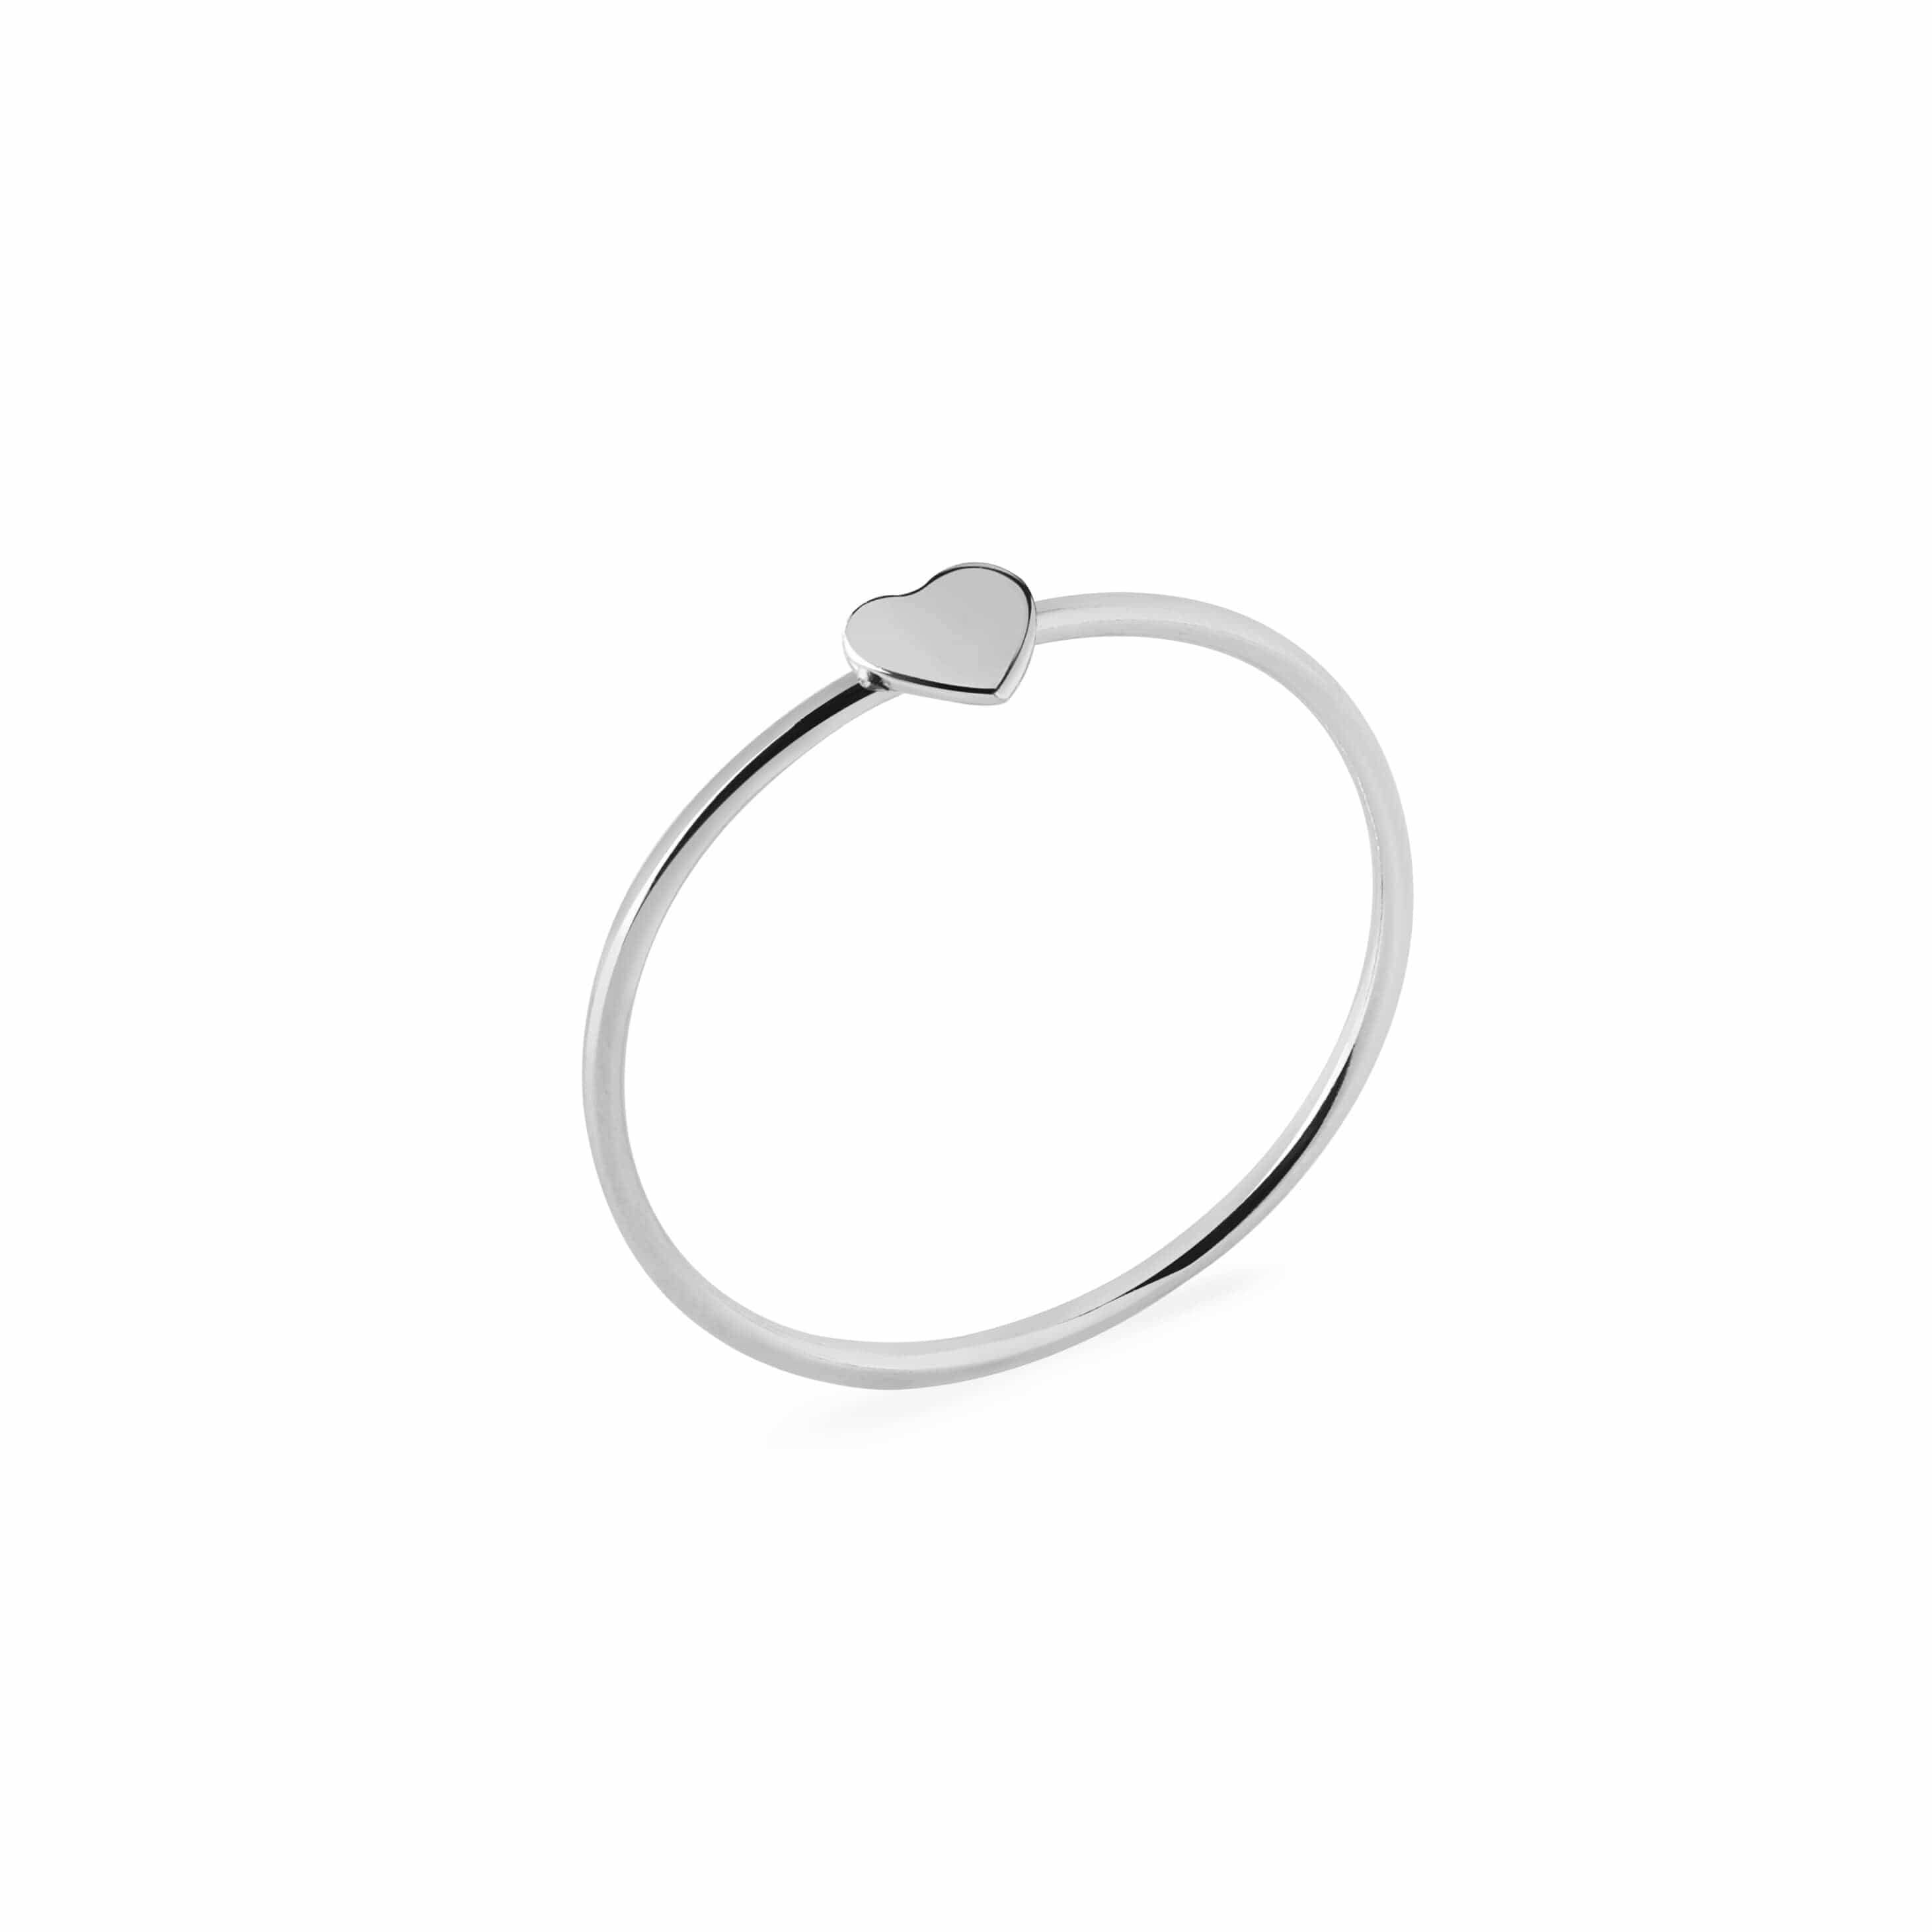 Pearl Gemstone 925 Sterling Silver Black Friday Jewlry Ring Women All Size  EB-43 | eBay